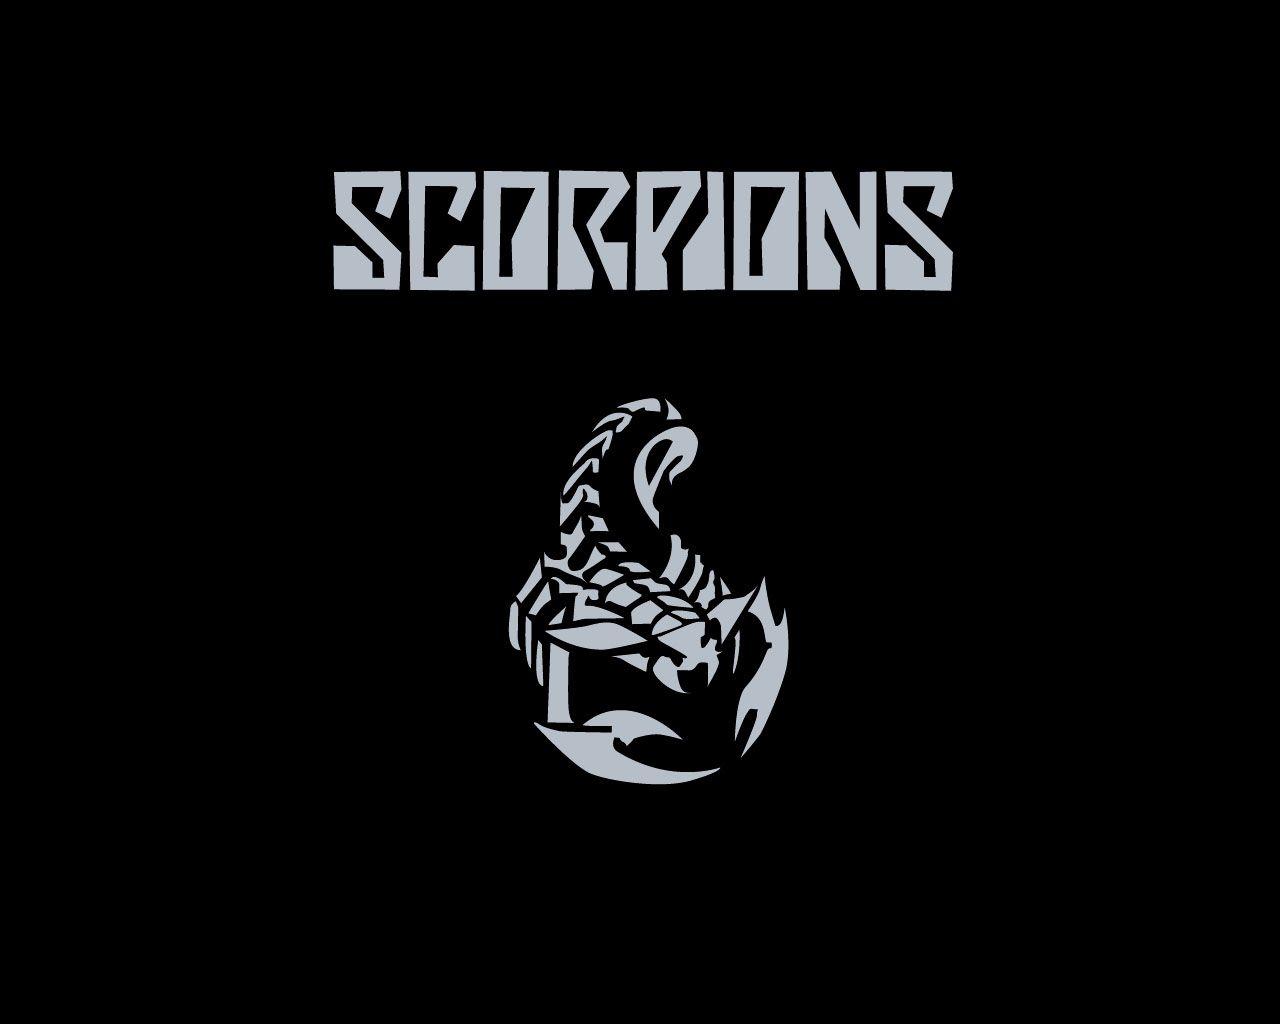 Scorpions Wallpaper, 46 Scorpions High Quality Picture, GuoGuiyan